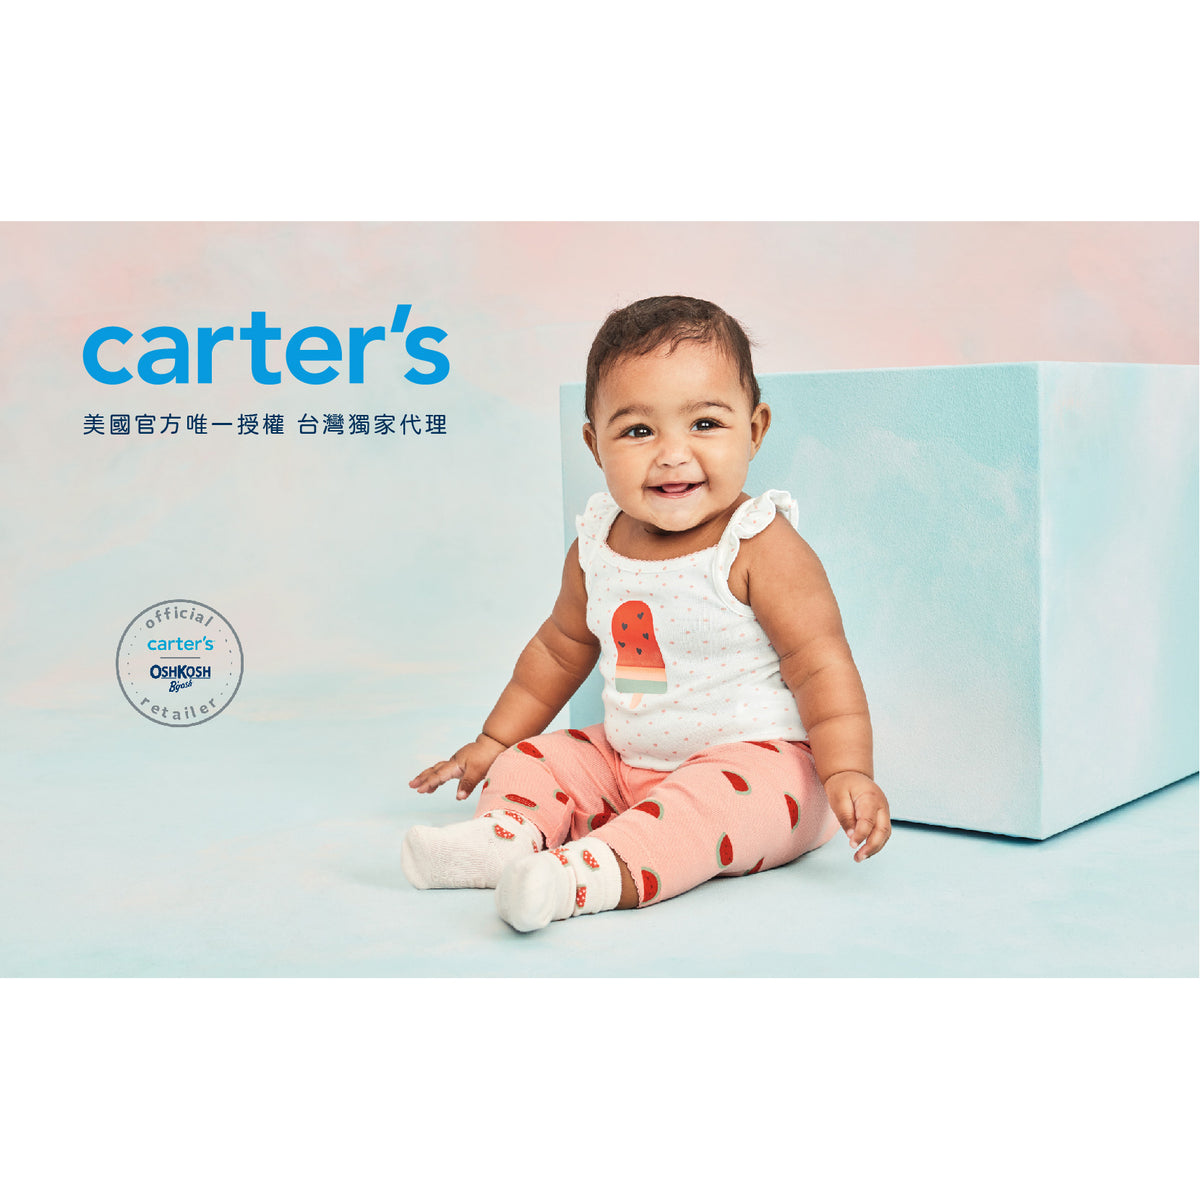 Carter's 淺藍小花兔連身褲(6M-24M)